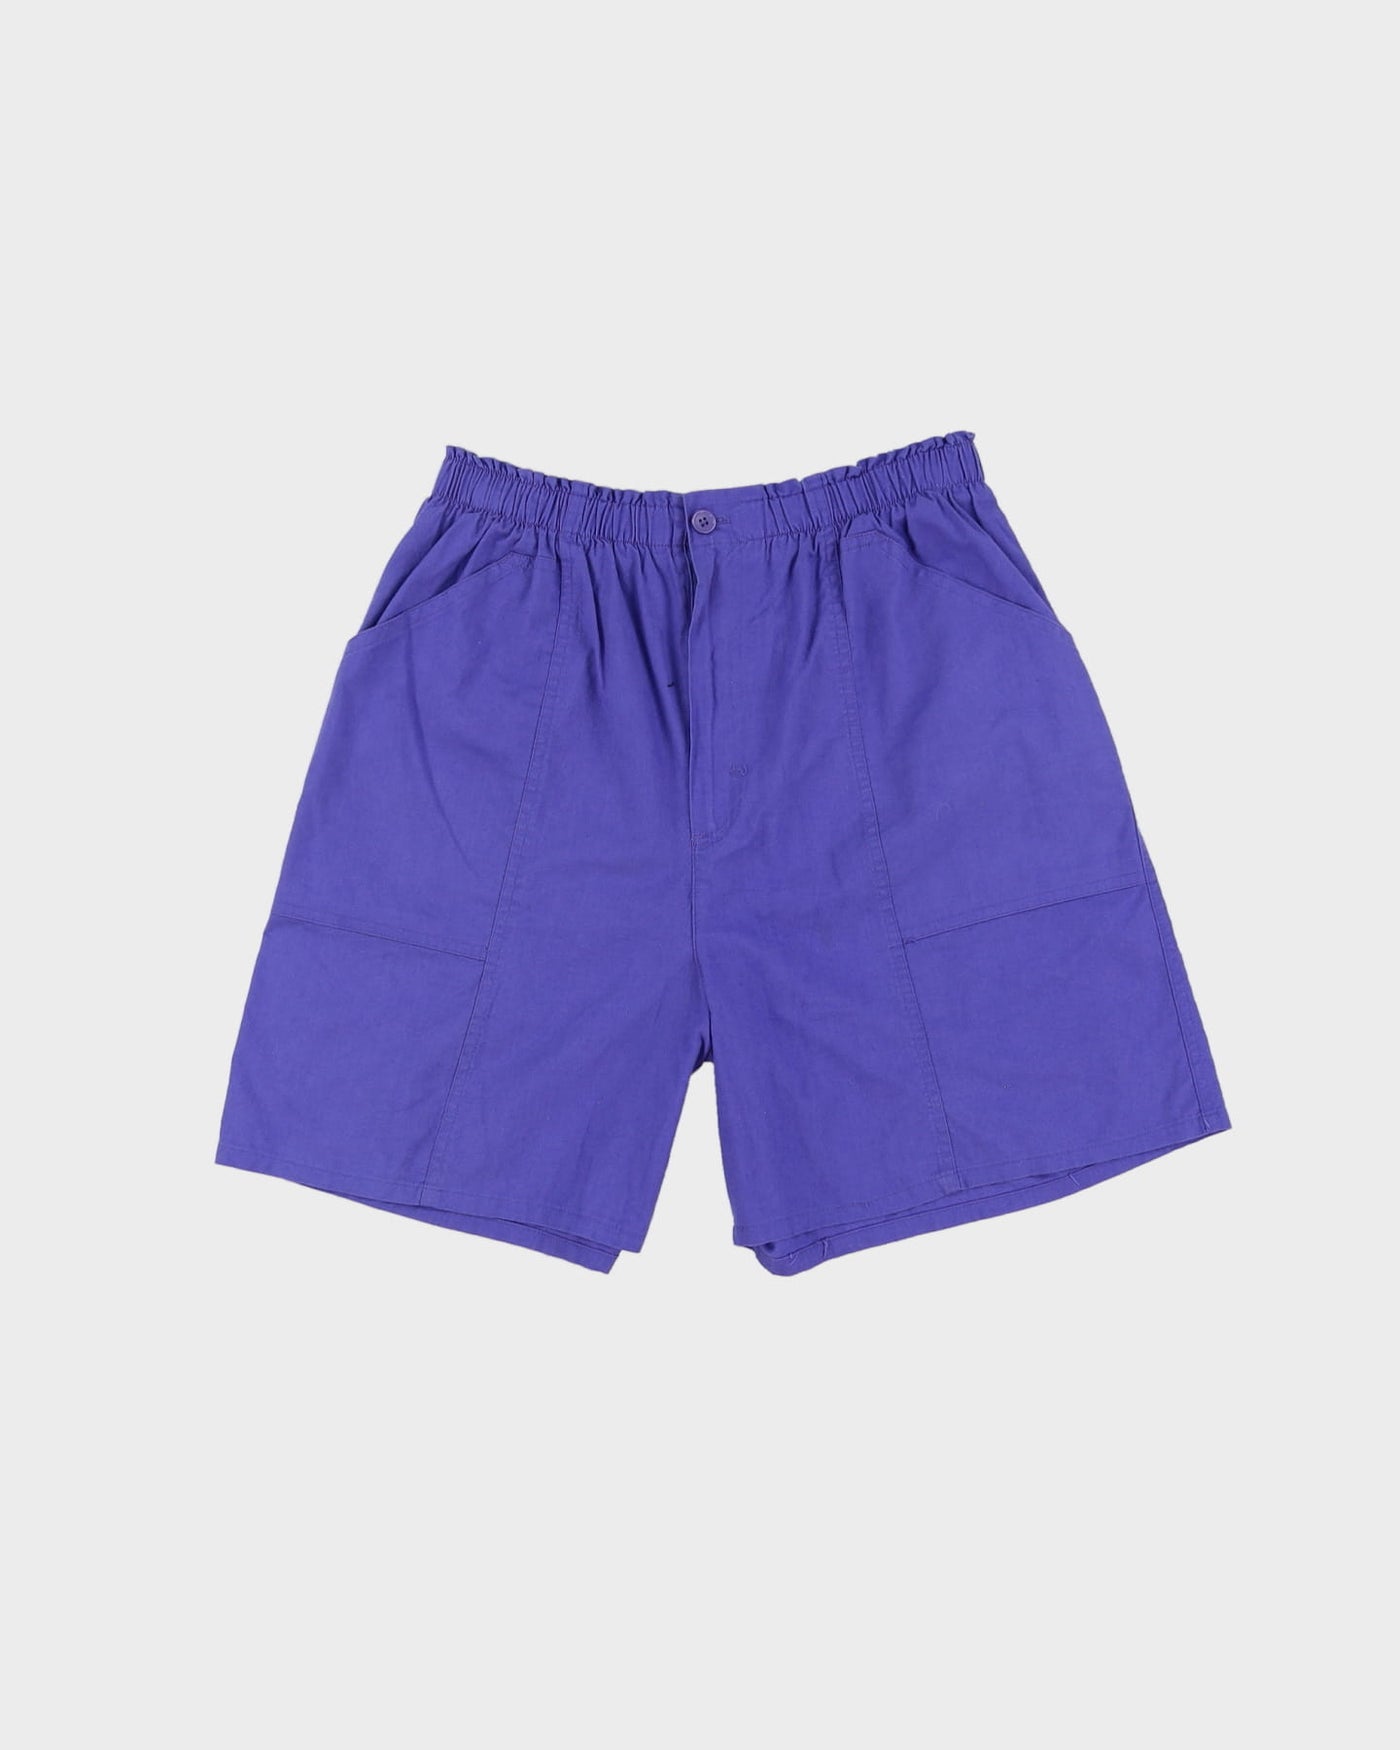 Vintage 90s Huntington Ridge Purple High Waist Shorts - W28